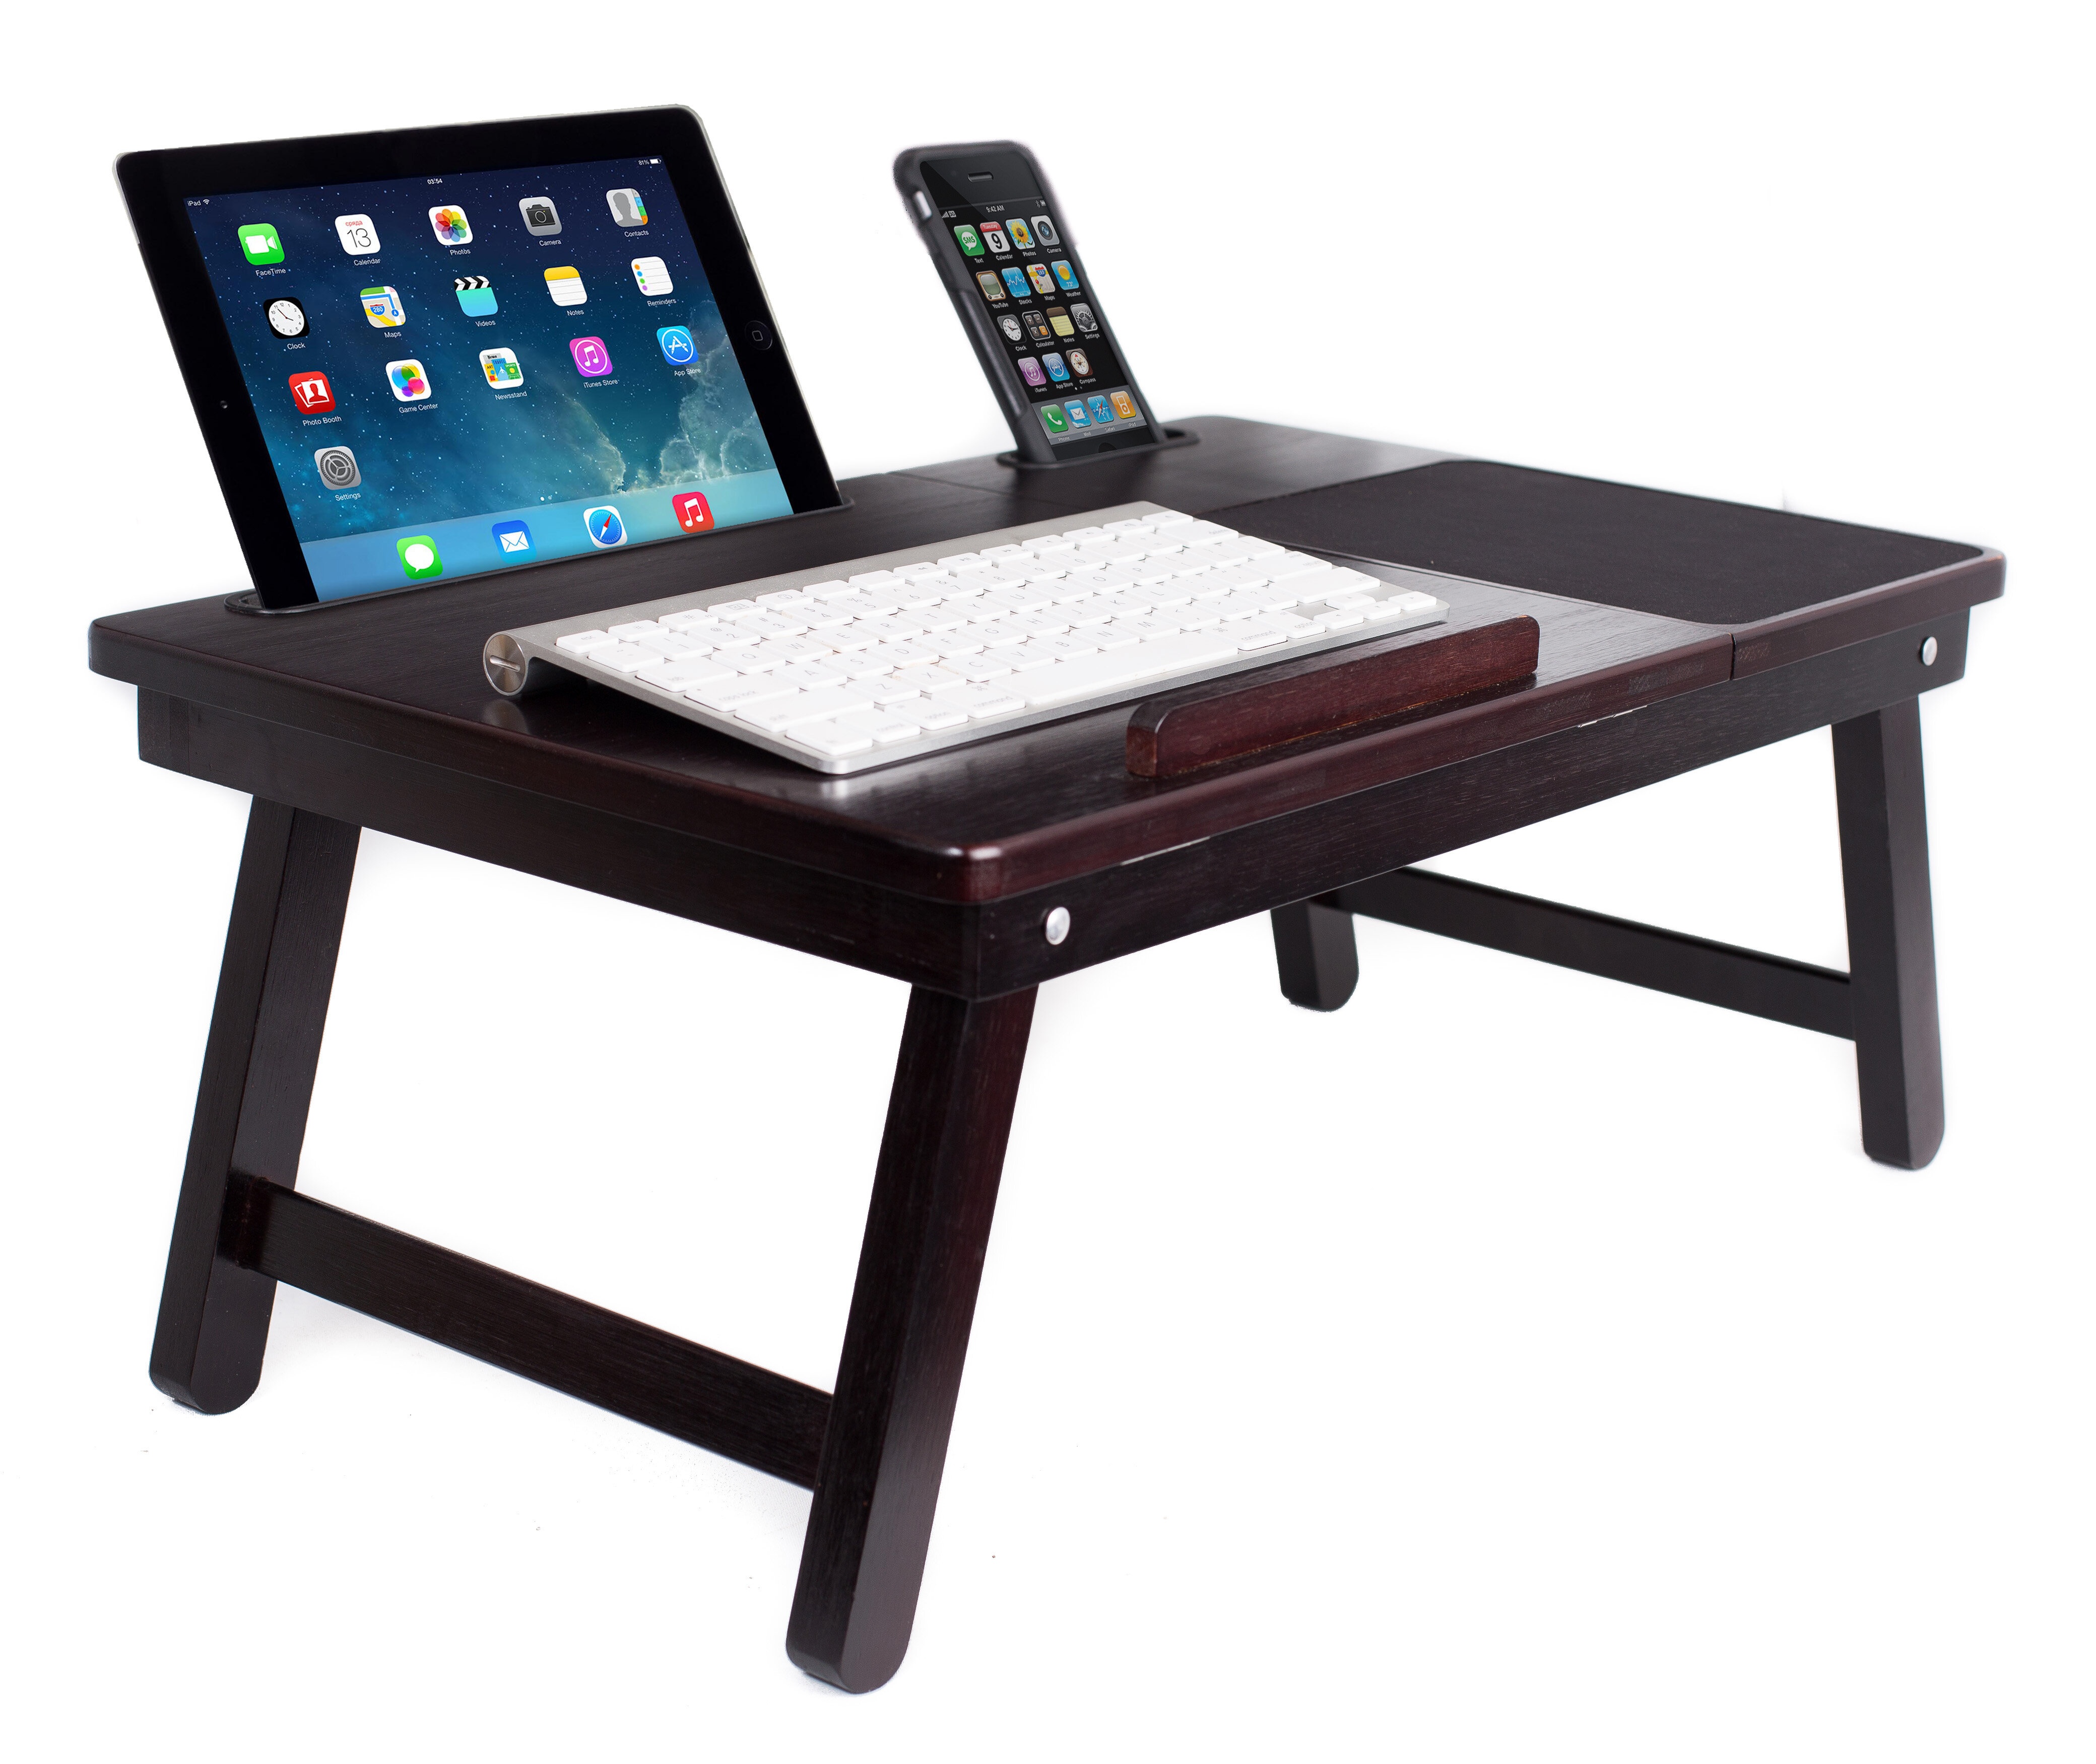 https://visualhunt.com/photos/23/sofia-sam-multi-tasking-laptop-bed-tray-bamboo-lap-desk-folding-tv-tray-table-smartphone-tablet-lap-tray-homework-study-reading-eating-food-walnut.jpg